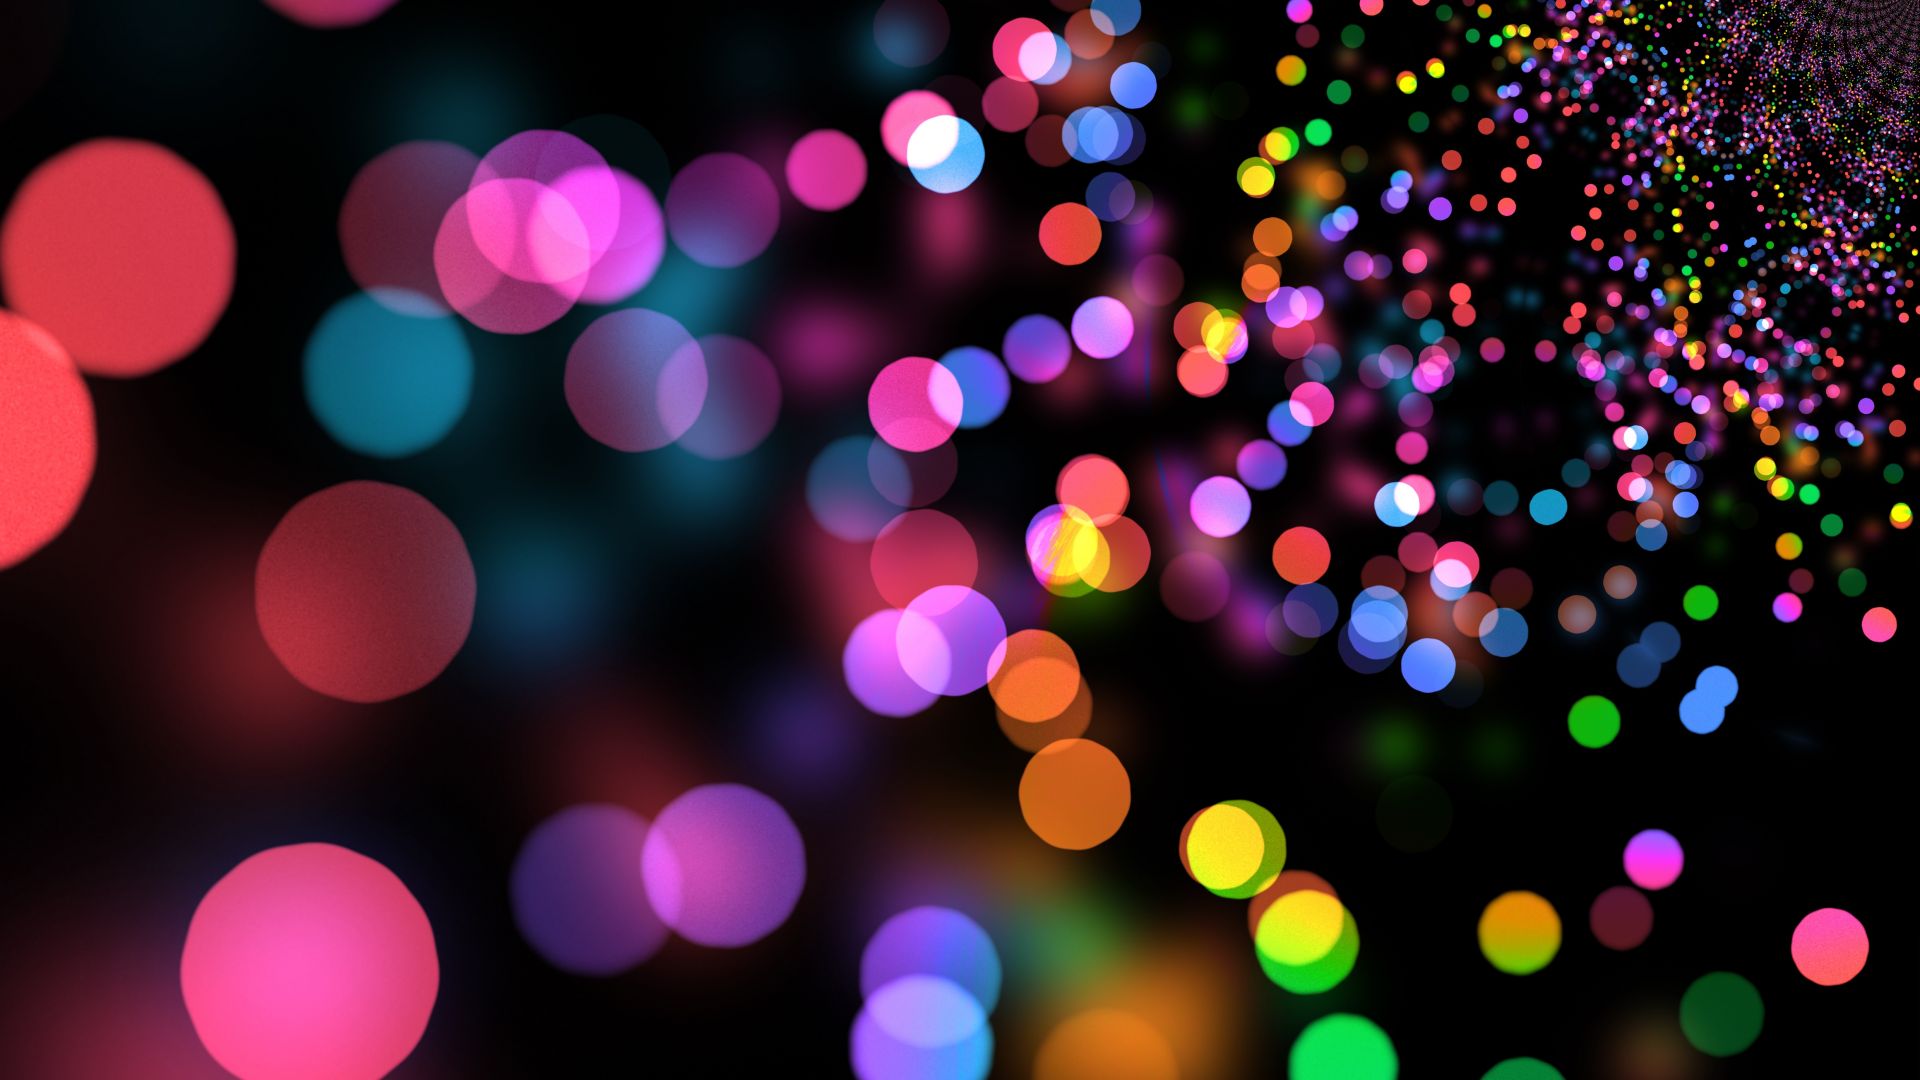 Desktop Wallpaper Party Lights, Circles, Colorful, Bokeh, Night, Hd Image,  Picture, Background, Tnplav